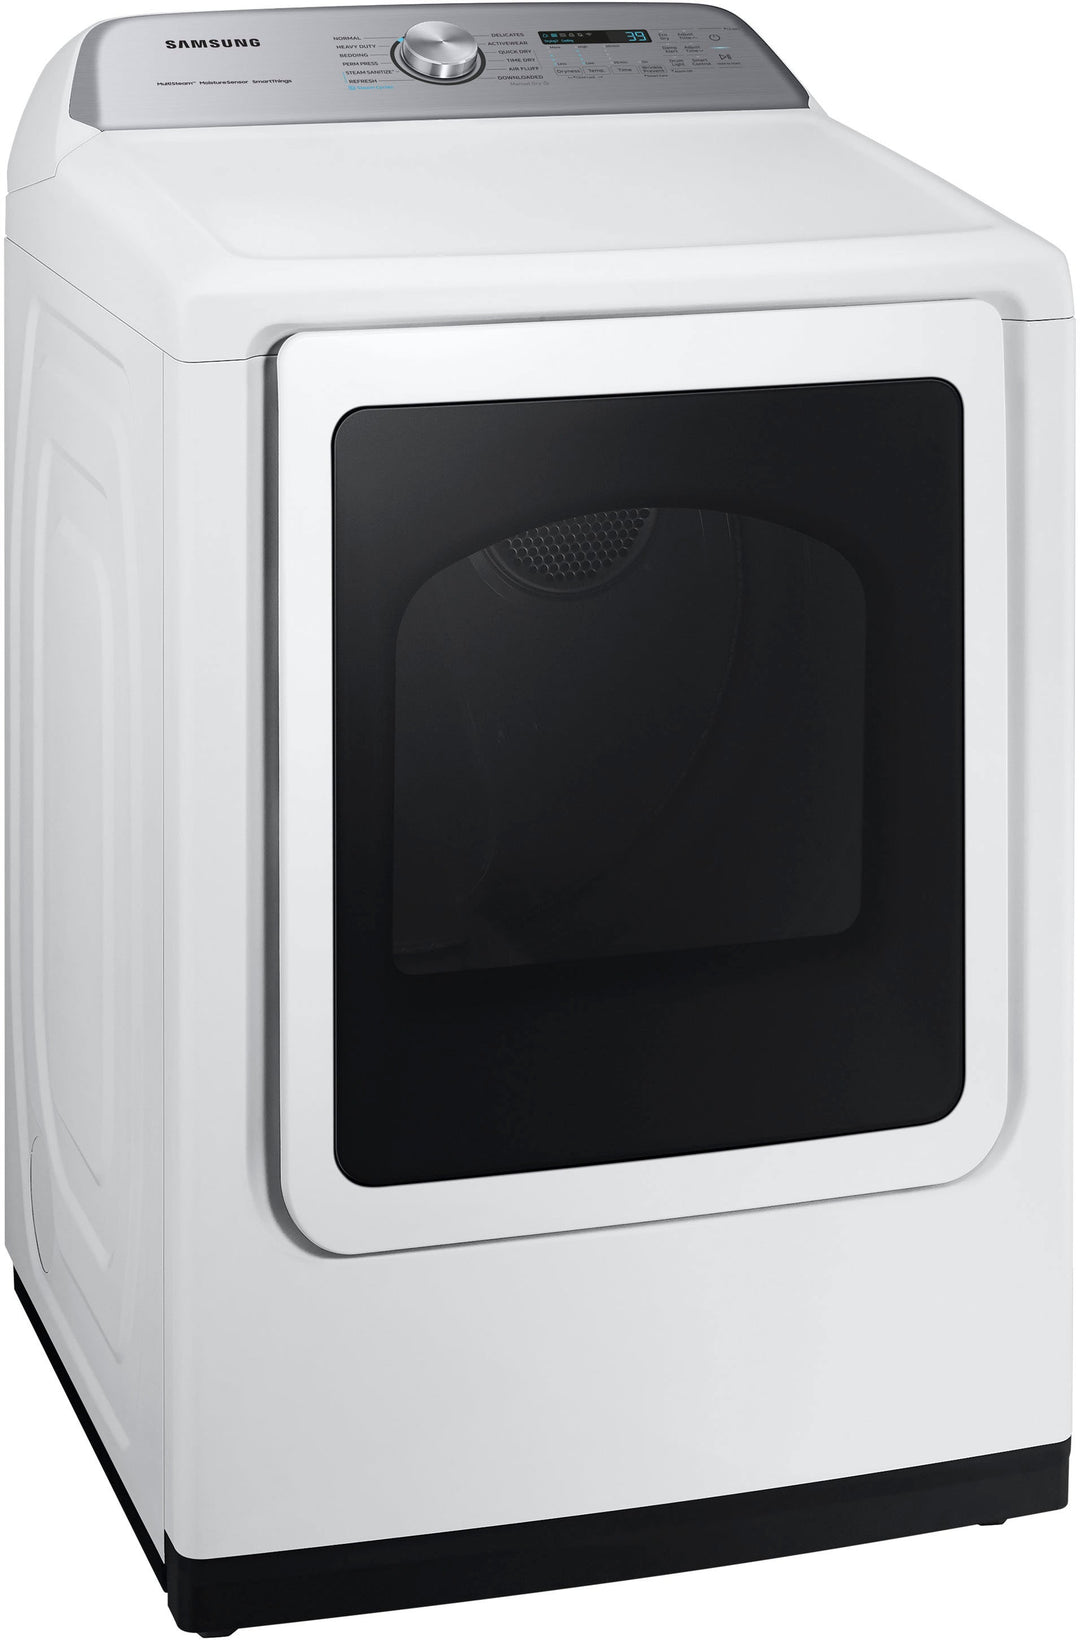 Samsung - 7.4 cu. ft. Smart Gas Dryer with Steam Sanitize+ - White_9